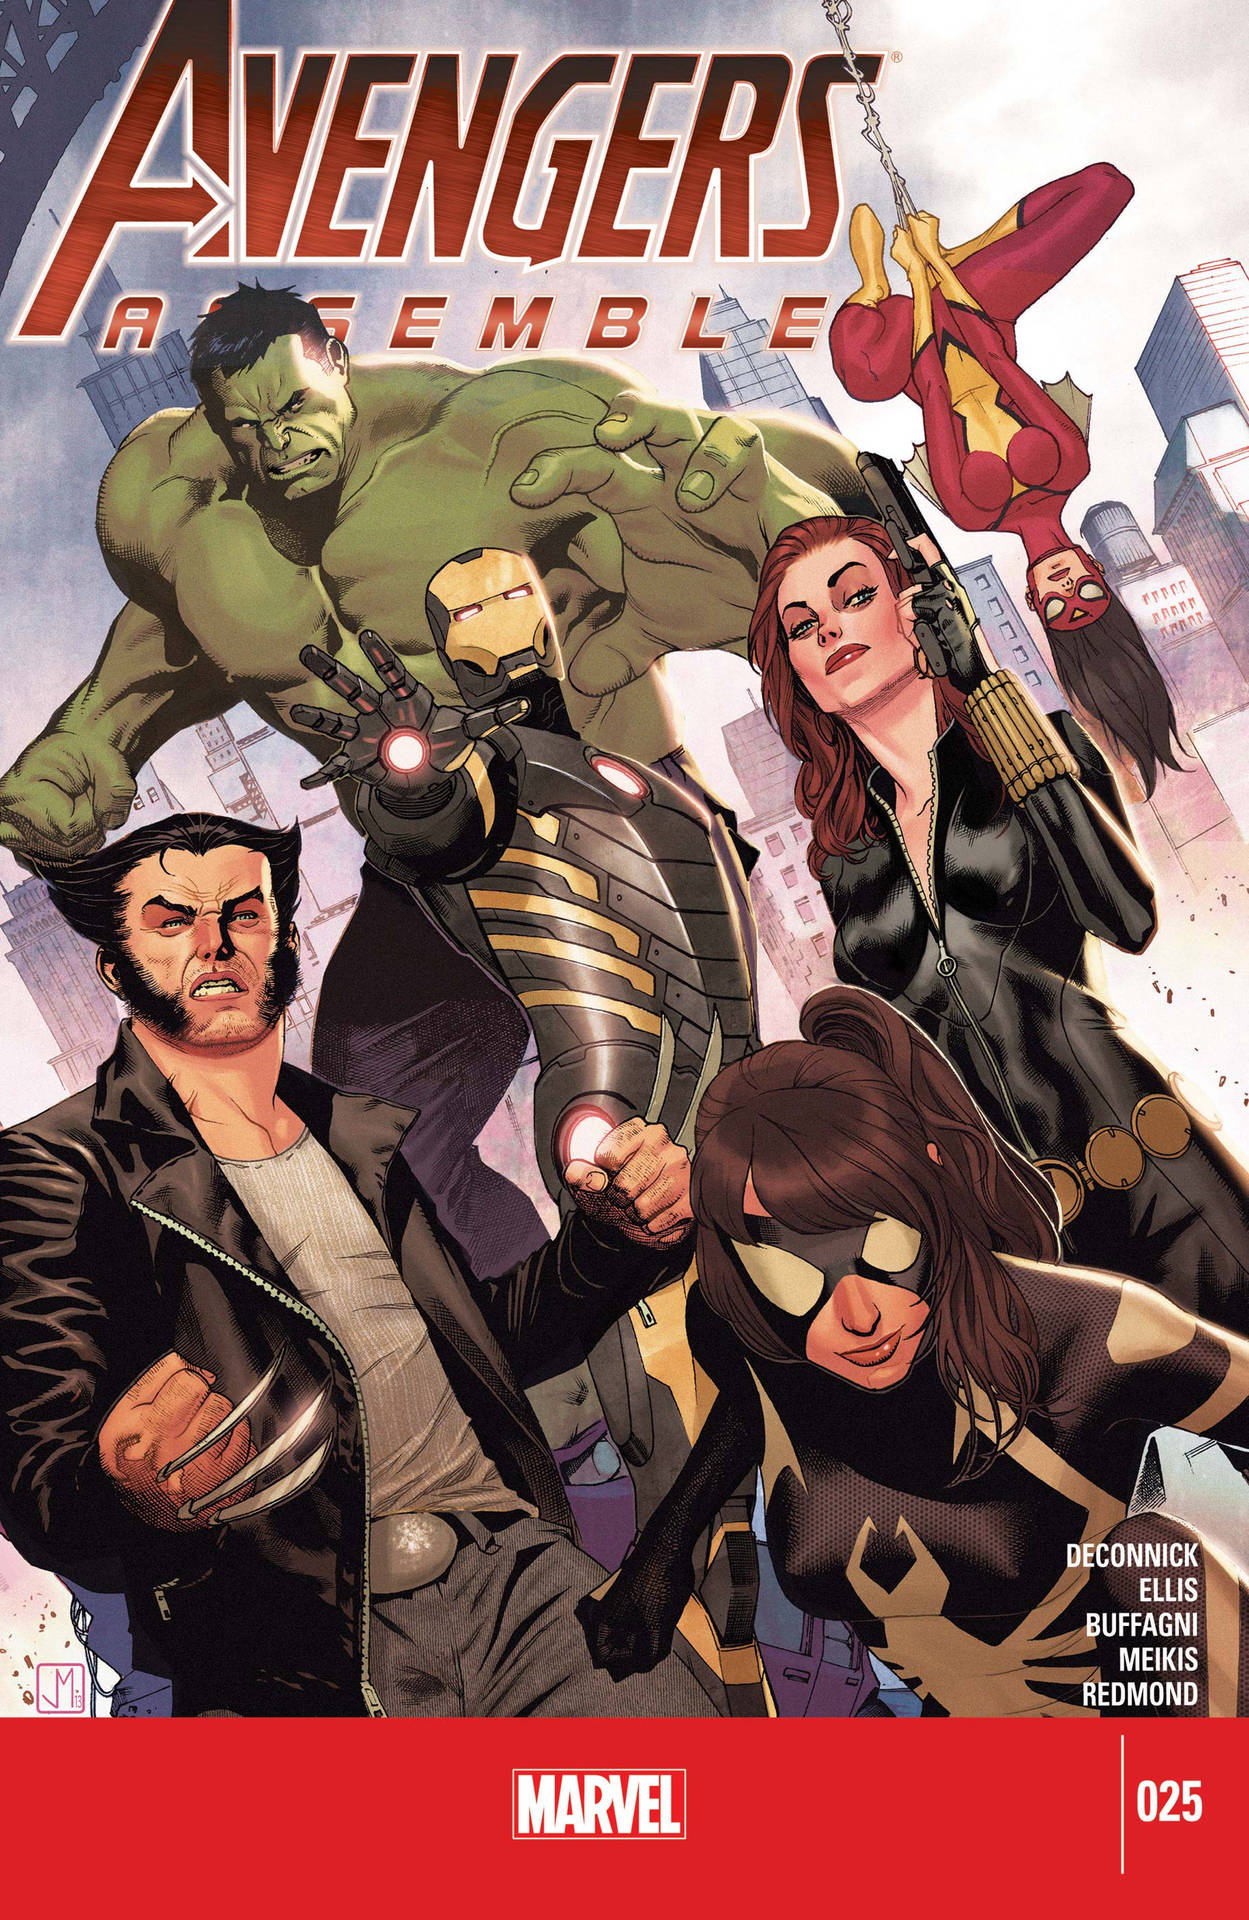 Avengersversammeln Sich Wolverine Wallpaper